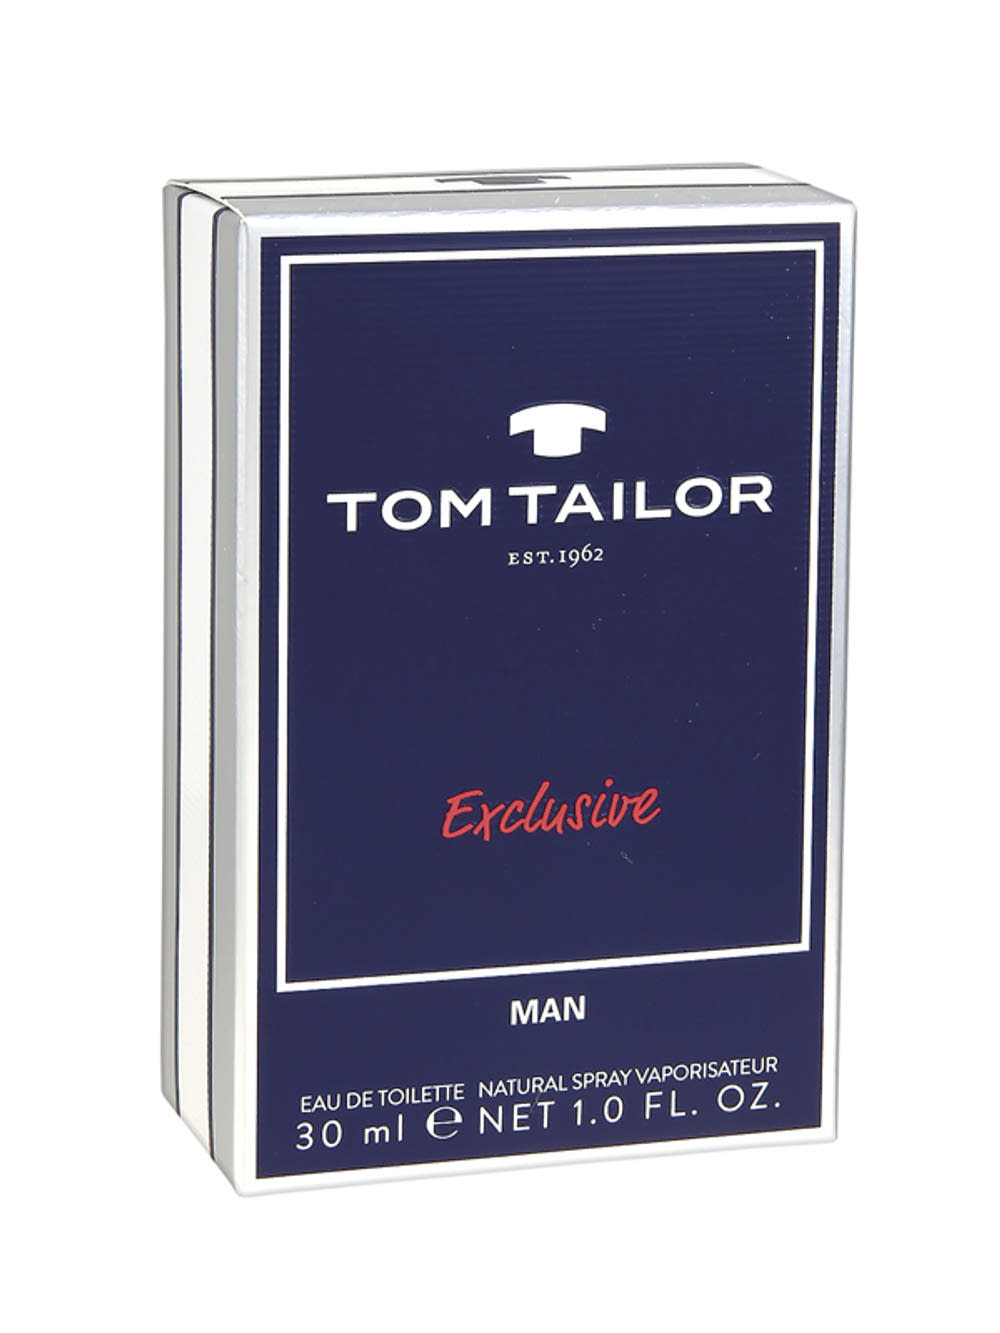 Toilette Tom Tailor férfi de Exclusive ml 30 Eau -